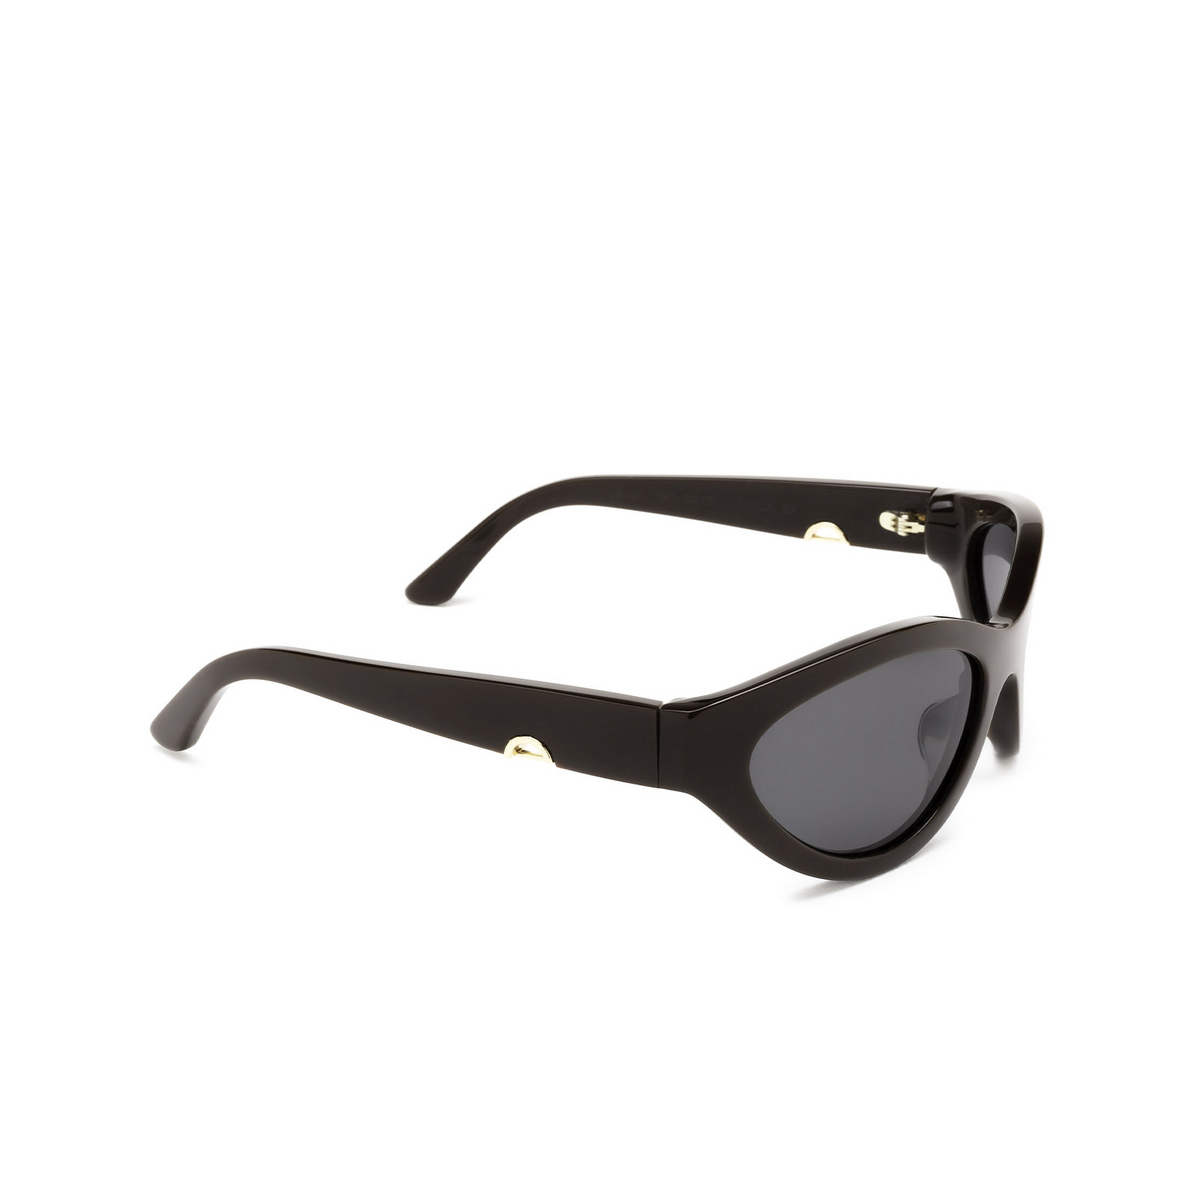 Huma® Mask Sunglasses: Linda color Chocolate 22 - three-quarters view.